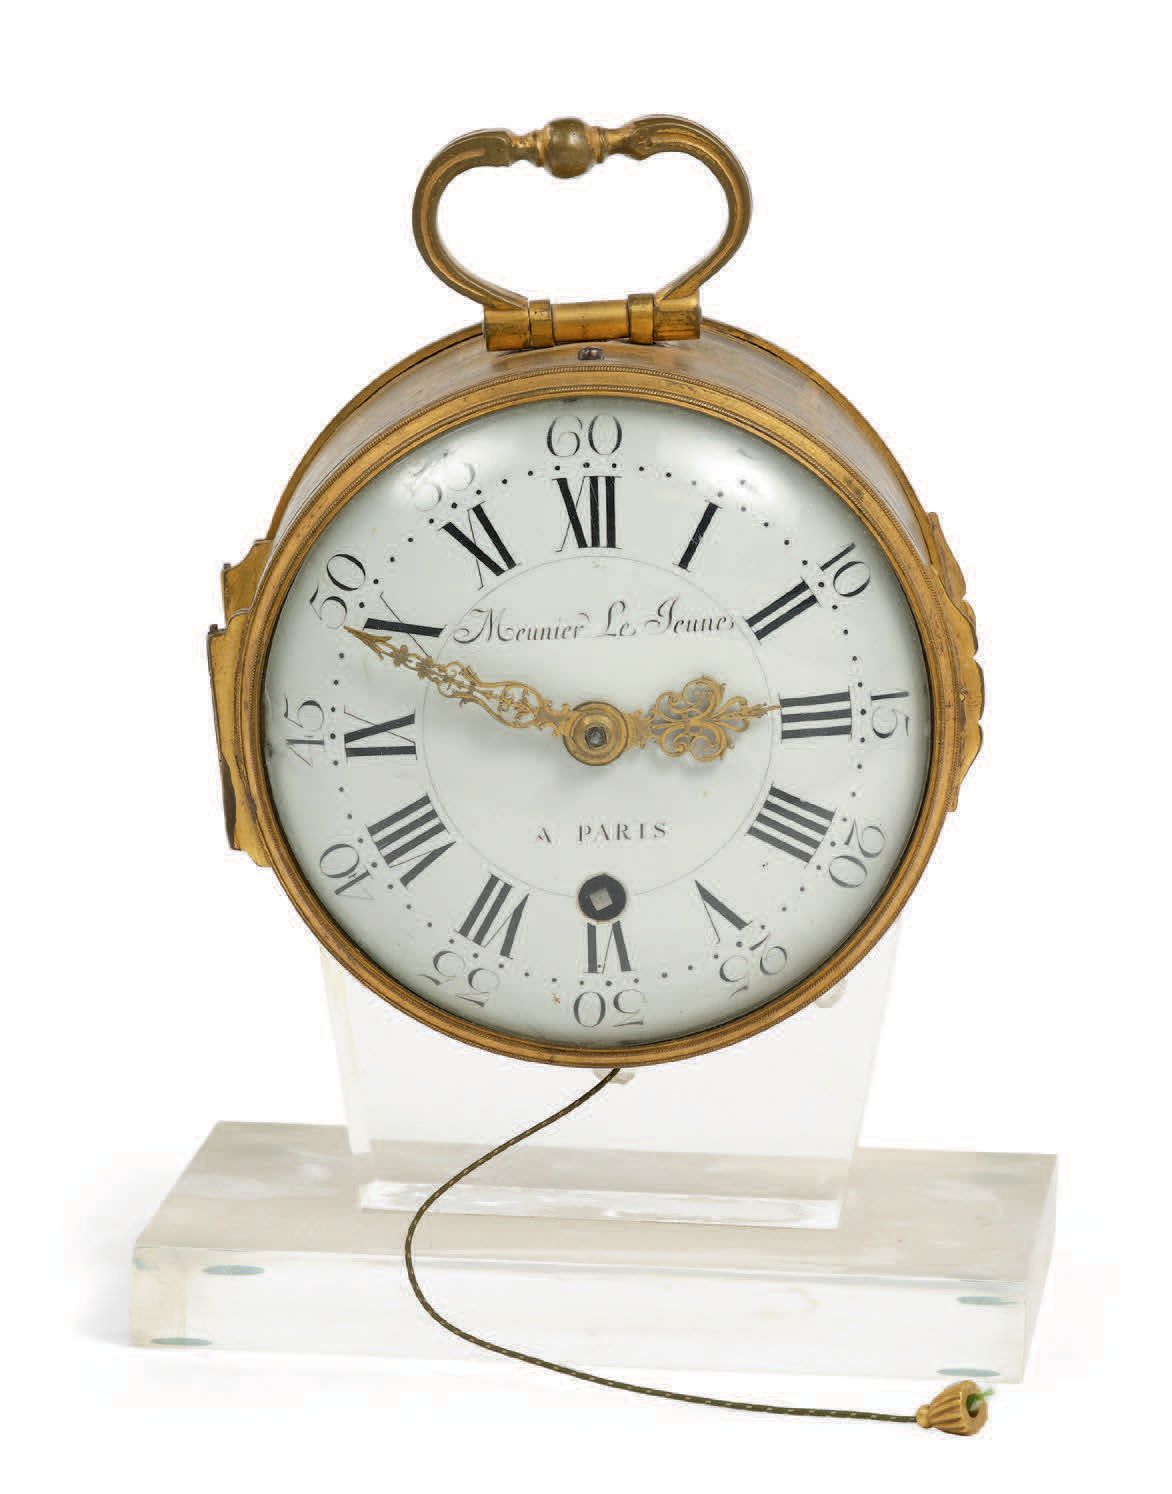 MEUNIER LE JEUNE, à Paris - Milieu XVIIIe siècle Reloj de alcoba con campana
Caj&hellip;